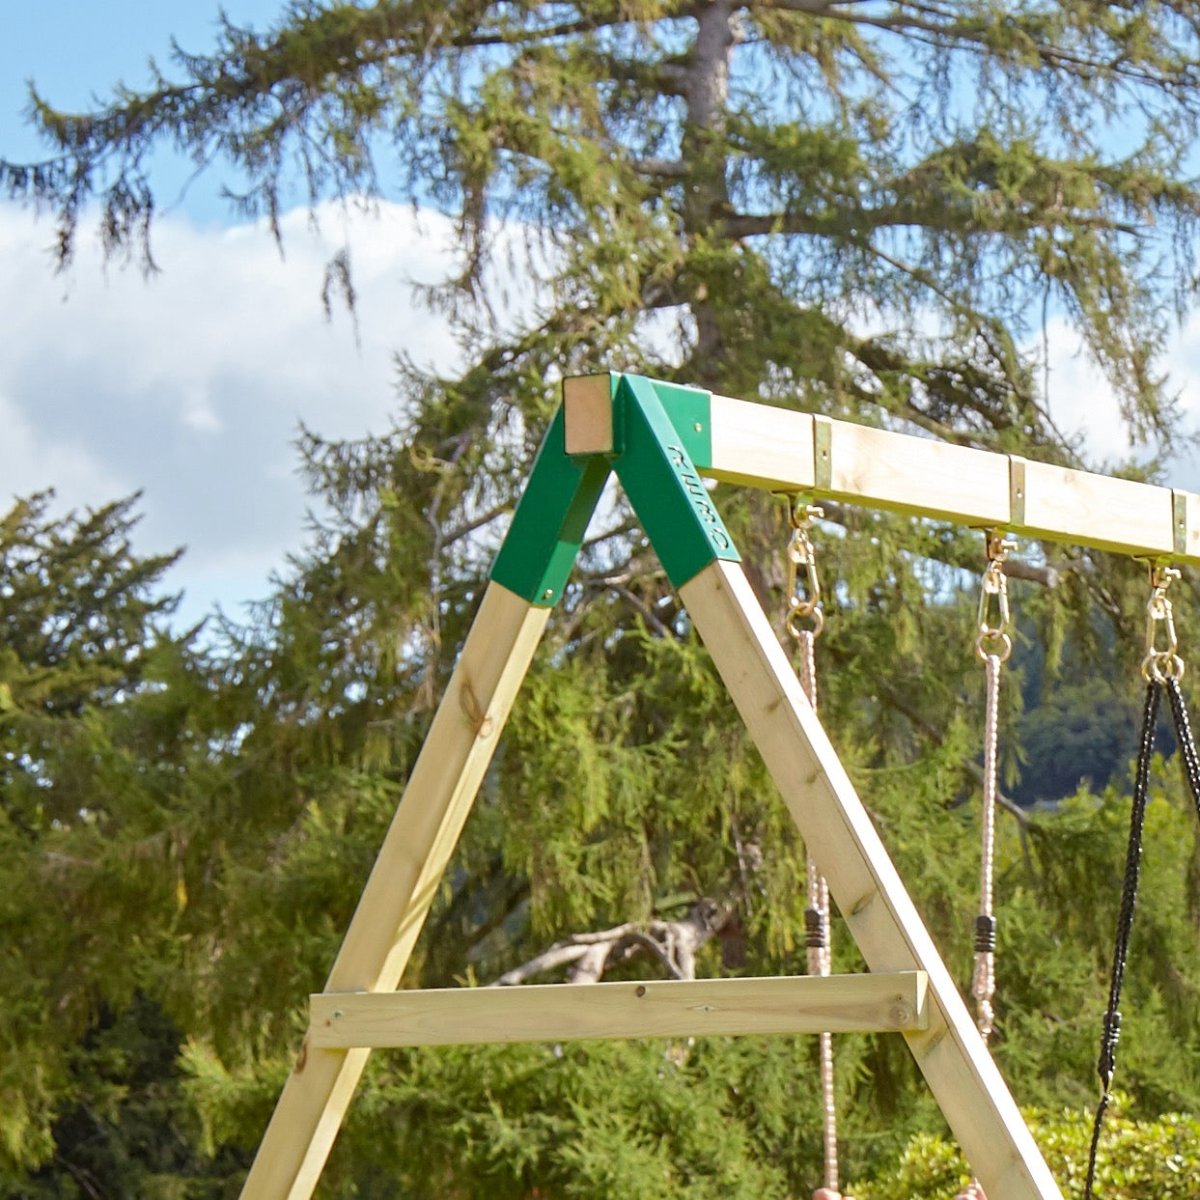 Rebo Double Tower Climbing Frame with Flexible Bridge, Swing & Slide - Rushmore